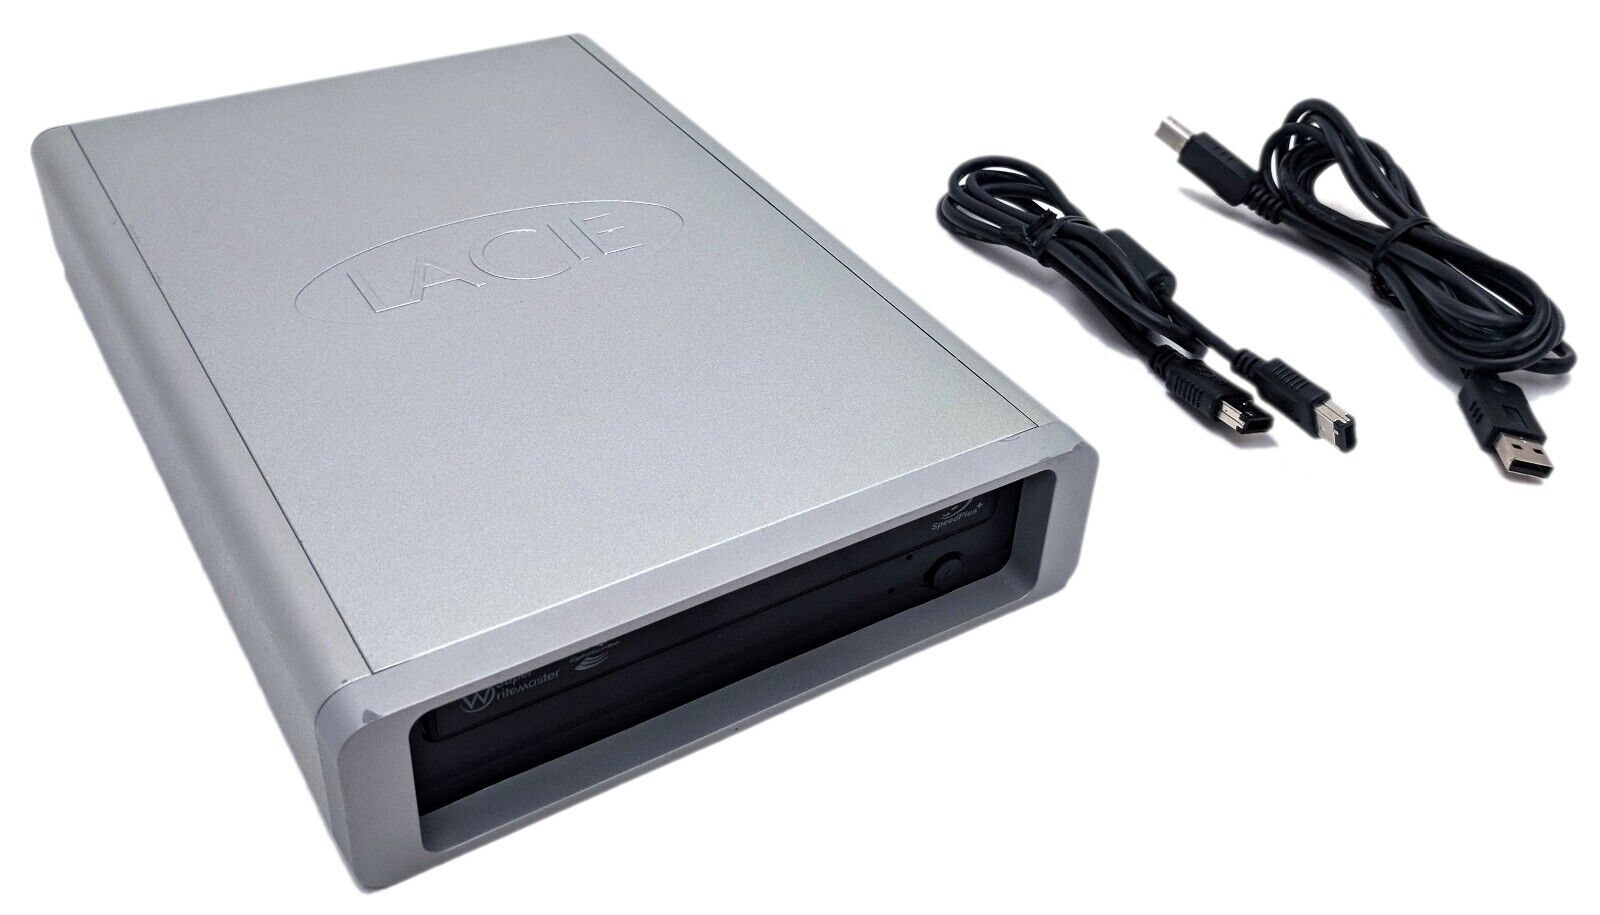 LaCie d2 525 USB2&FW External Drive Light Scribe Super Write Master DVD Recorder